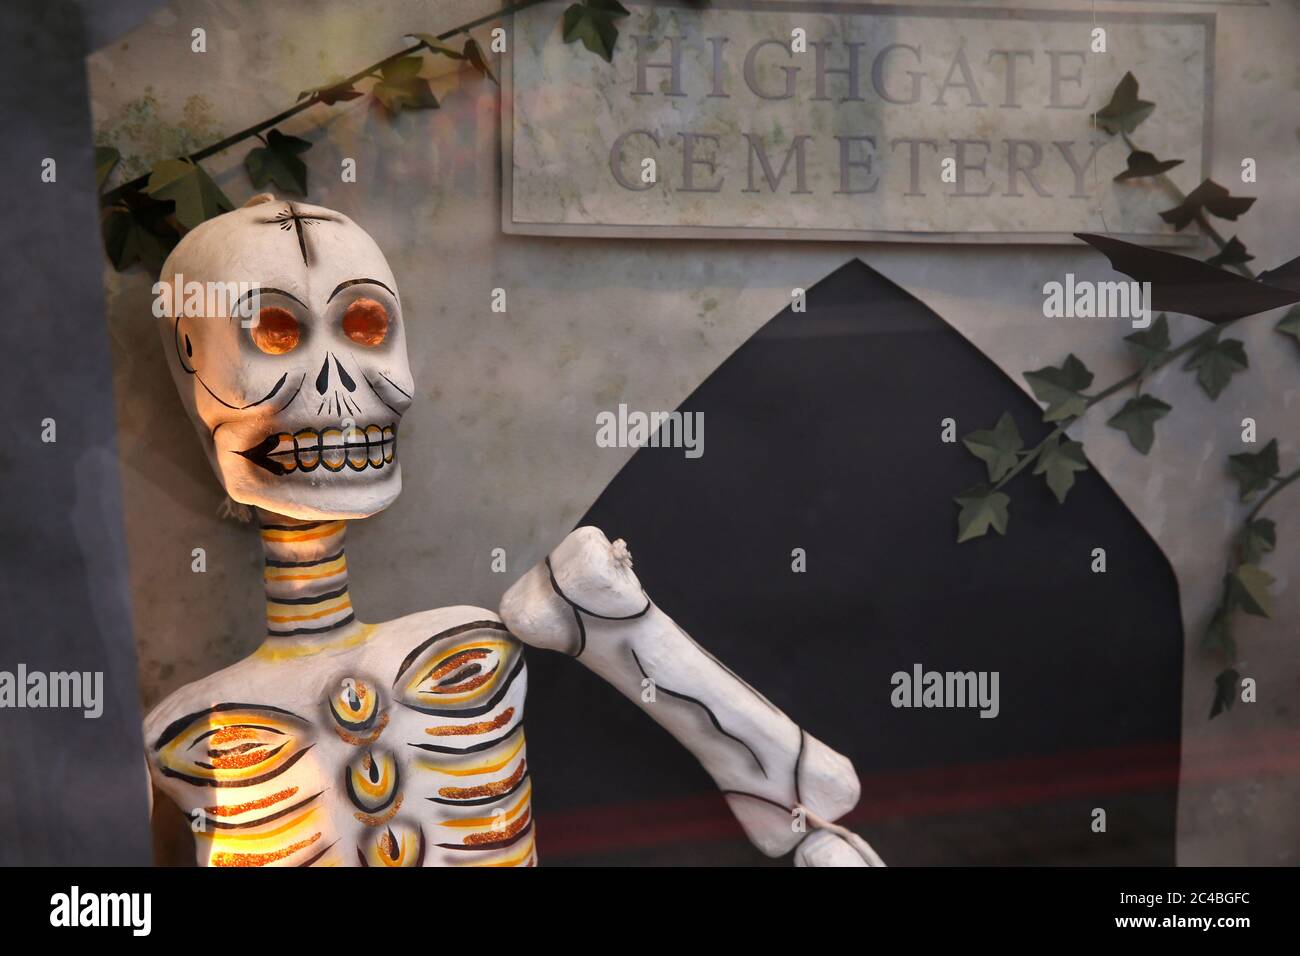 Fake skeleton in a highgate shop during halloween Stock Photo - Alamy